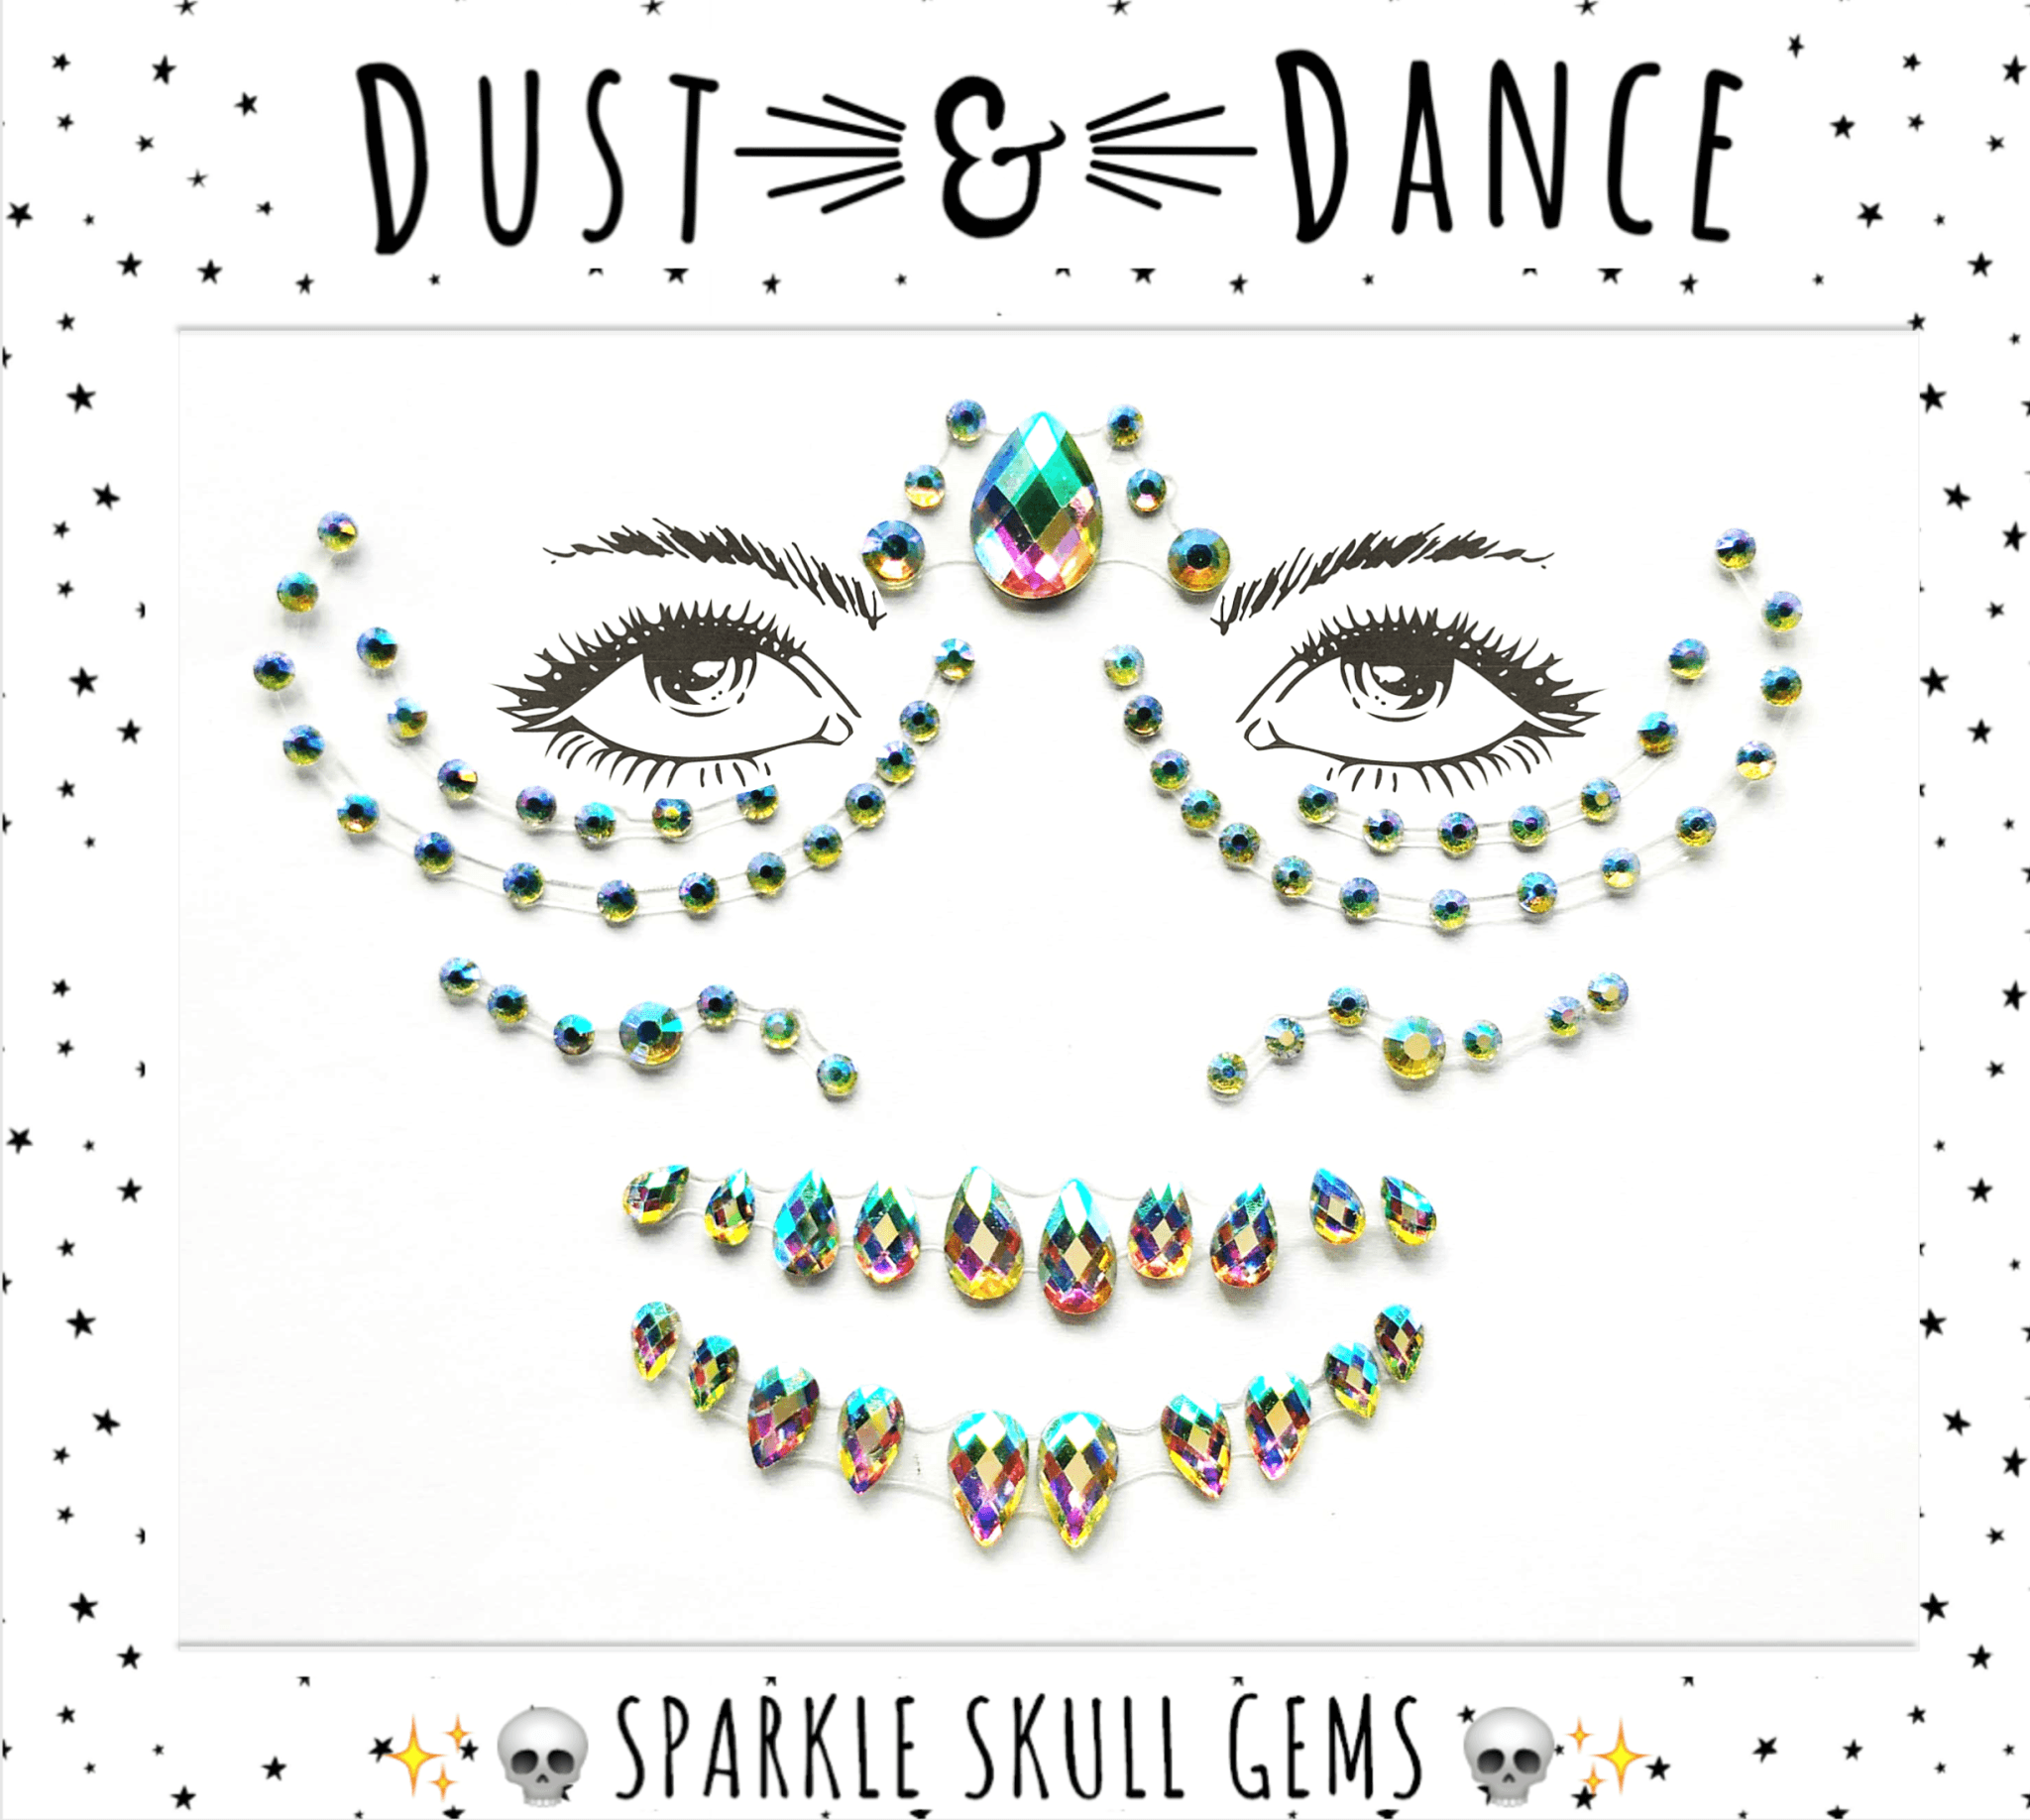 Sparkle Skull Jewels - Dust & Dance